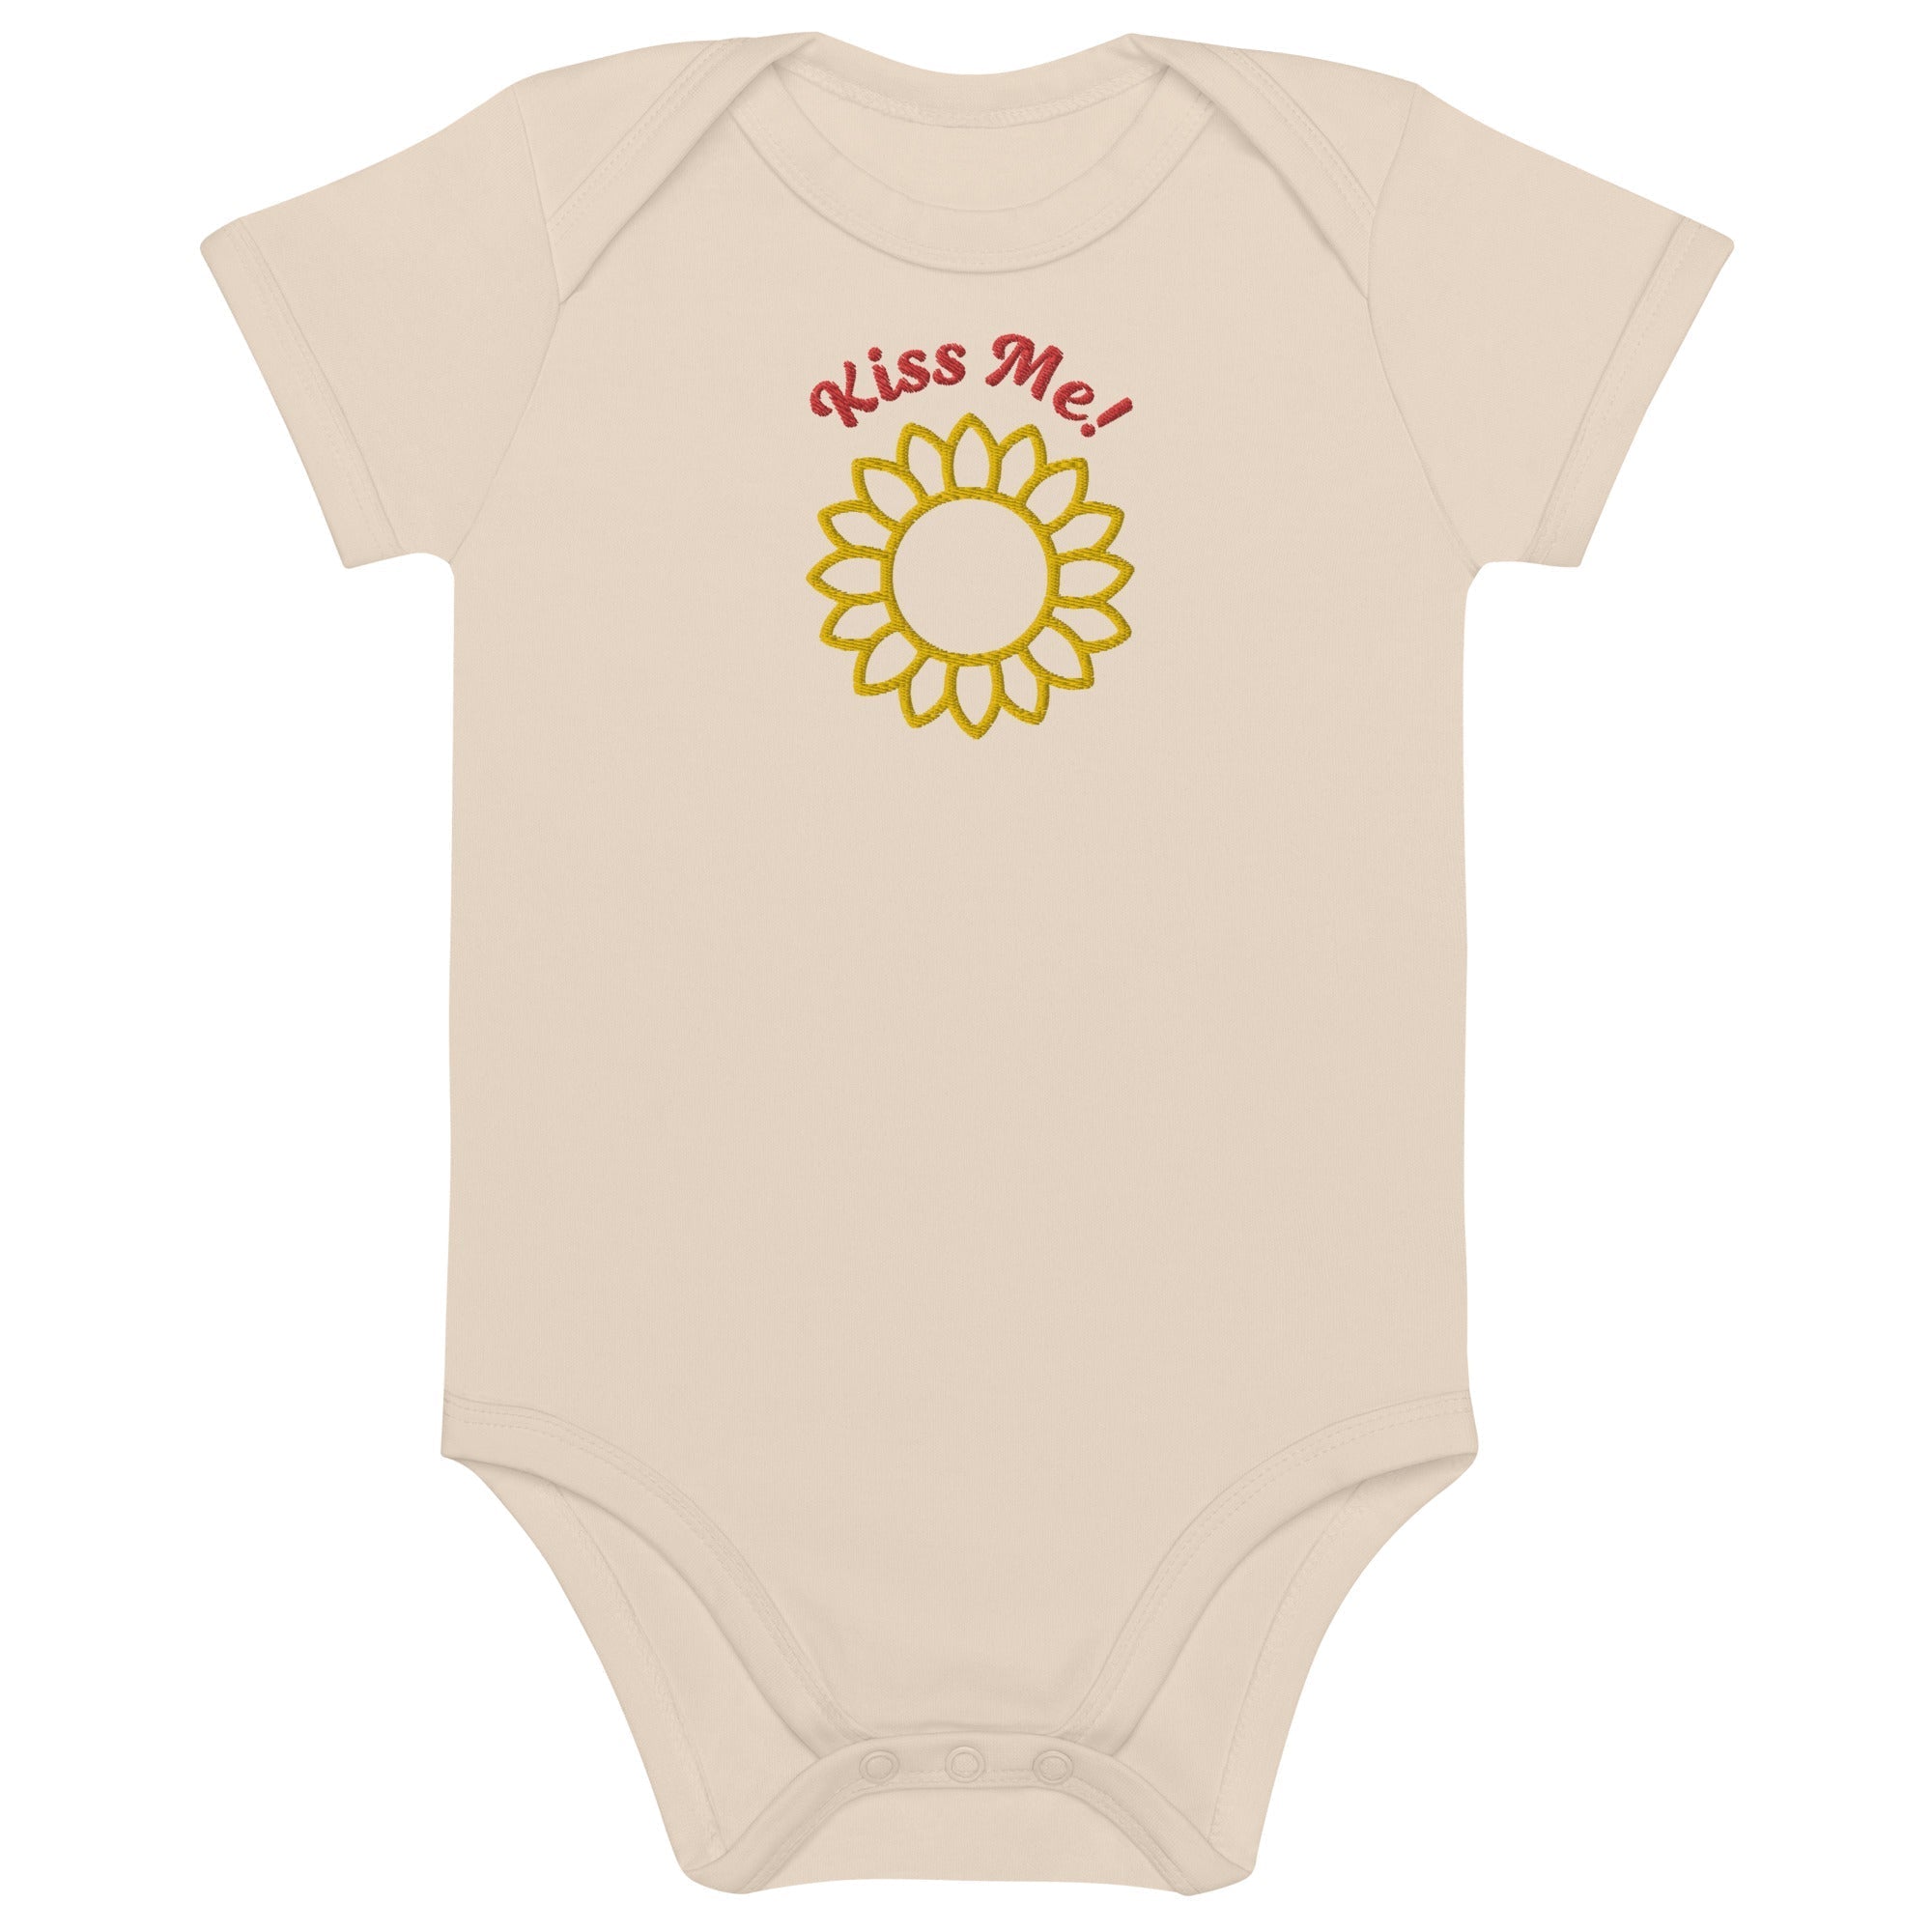 Organic-Cottonic Baby Bodysuit